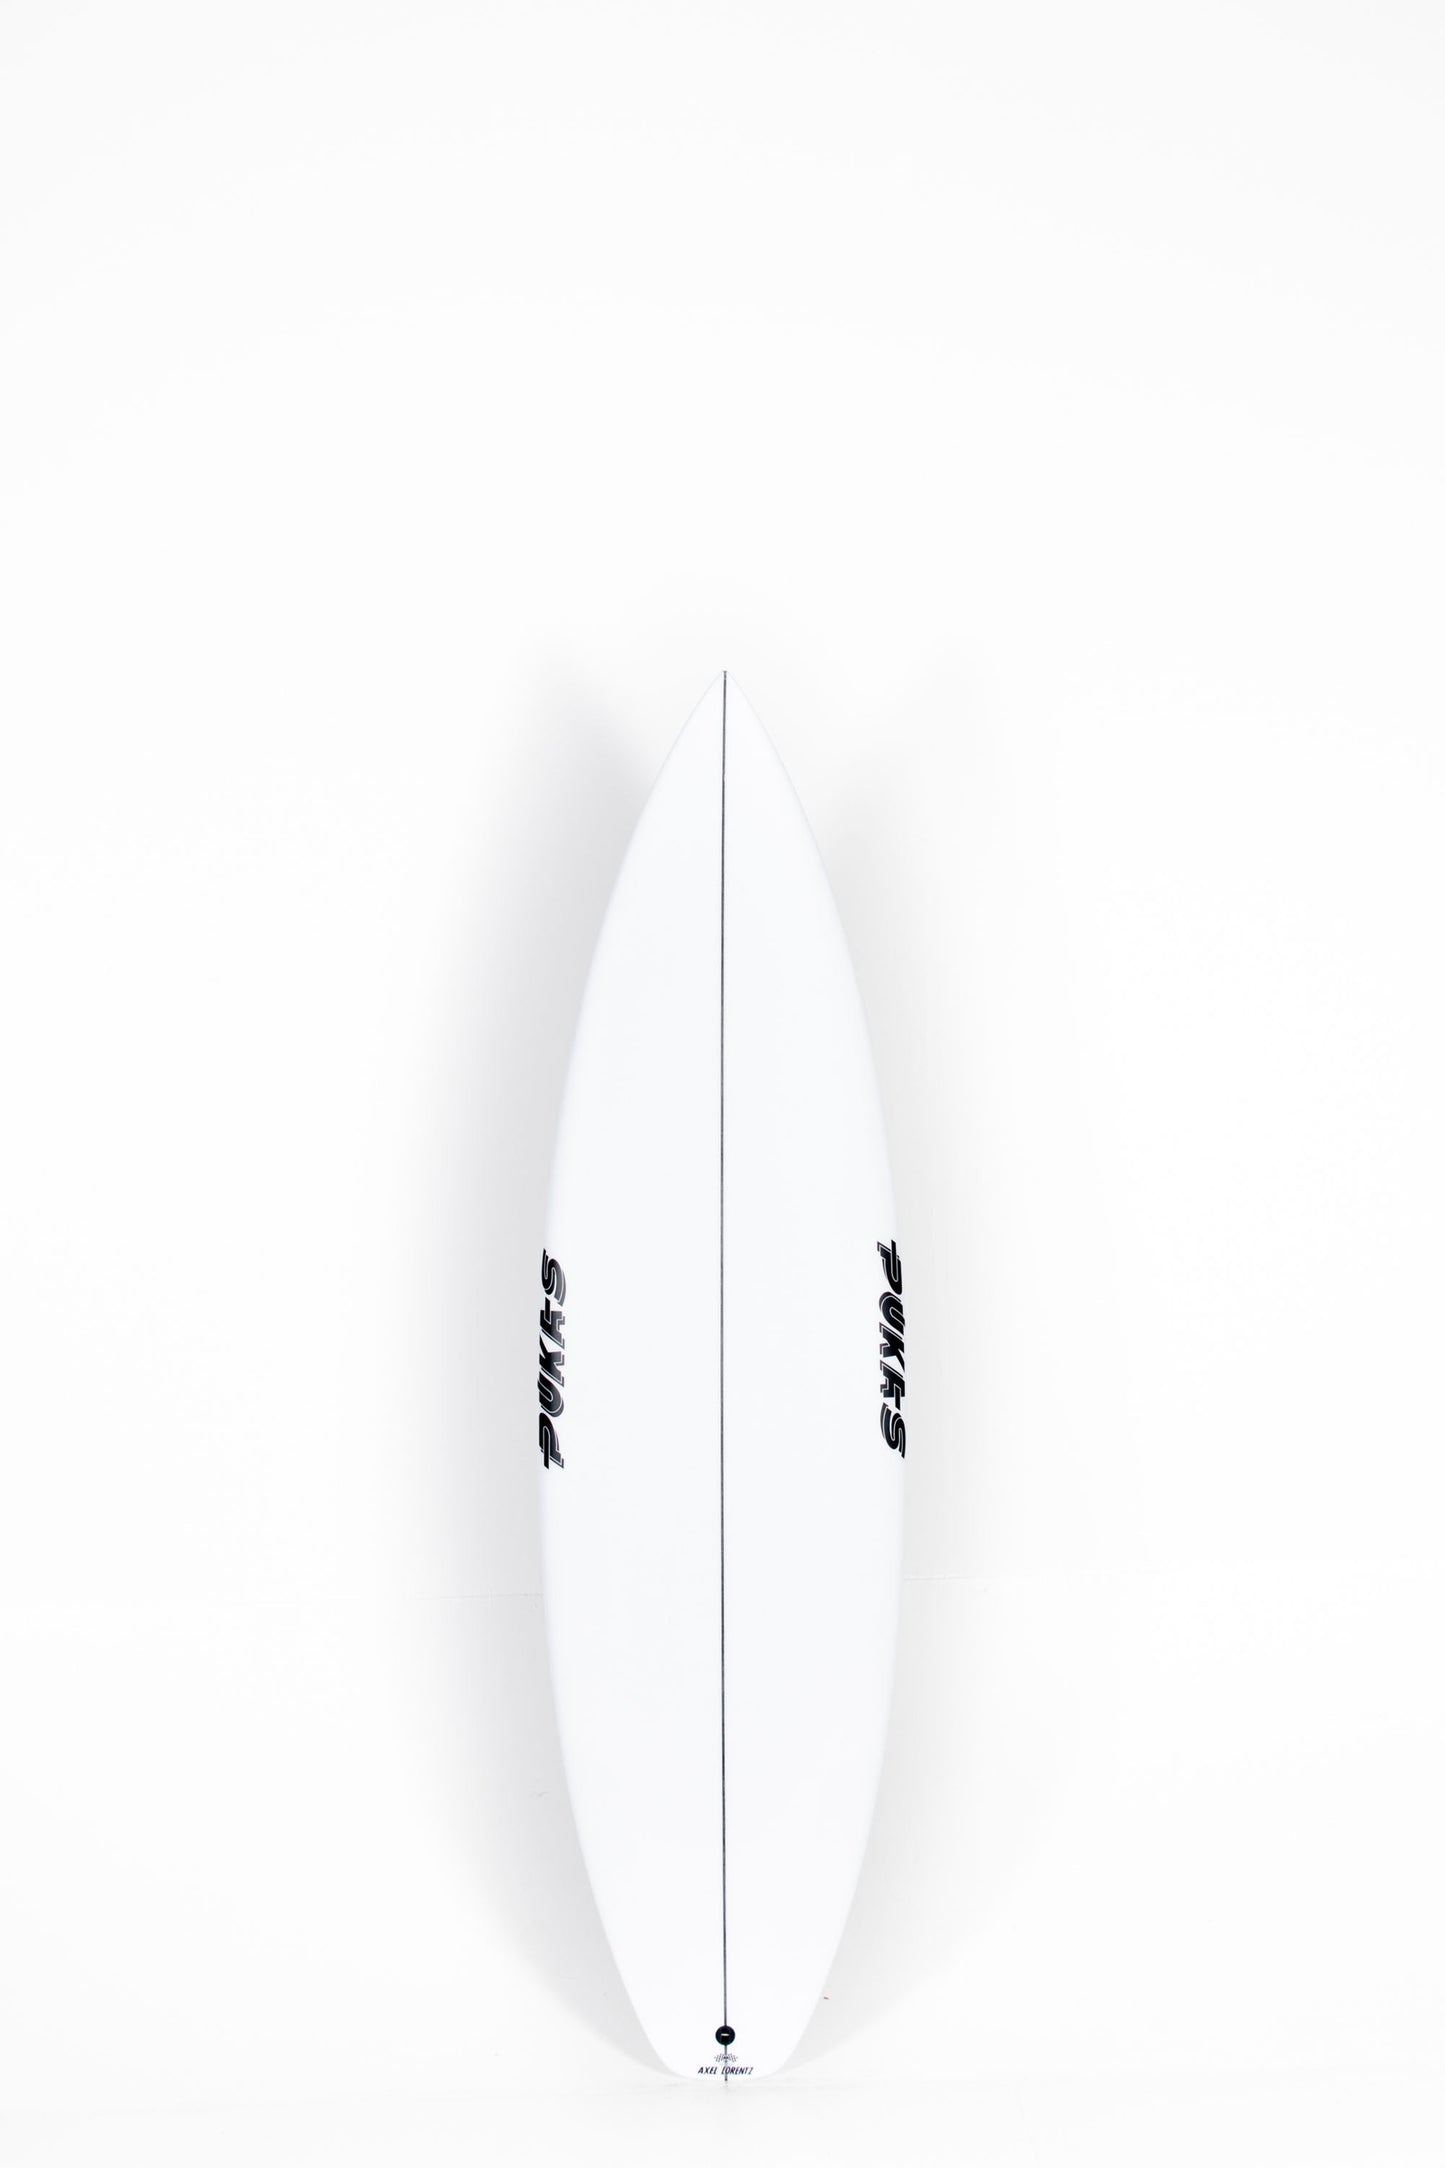 Pukas Surf Shop - Pukas Surfboard - DARK by Axel Lorentz - 6’2” x 19,75 x 2,43 - 31,61L - AX06156